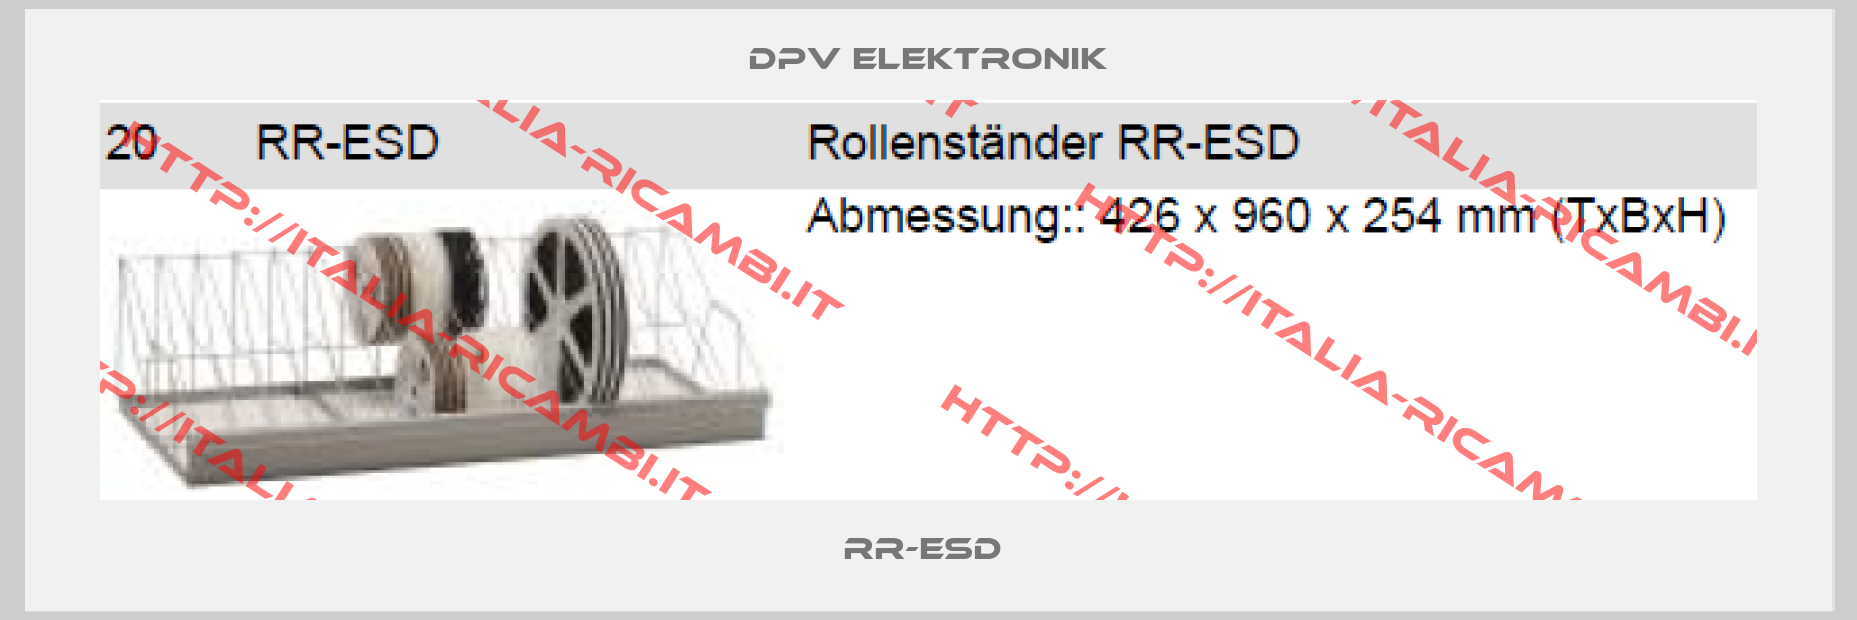 DPV Elektronik-RR-ESD 